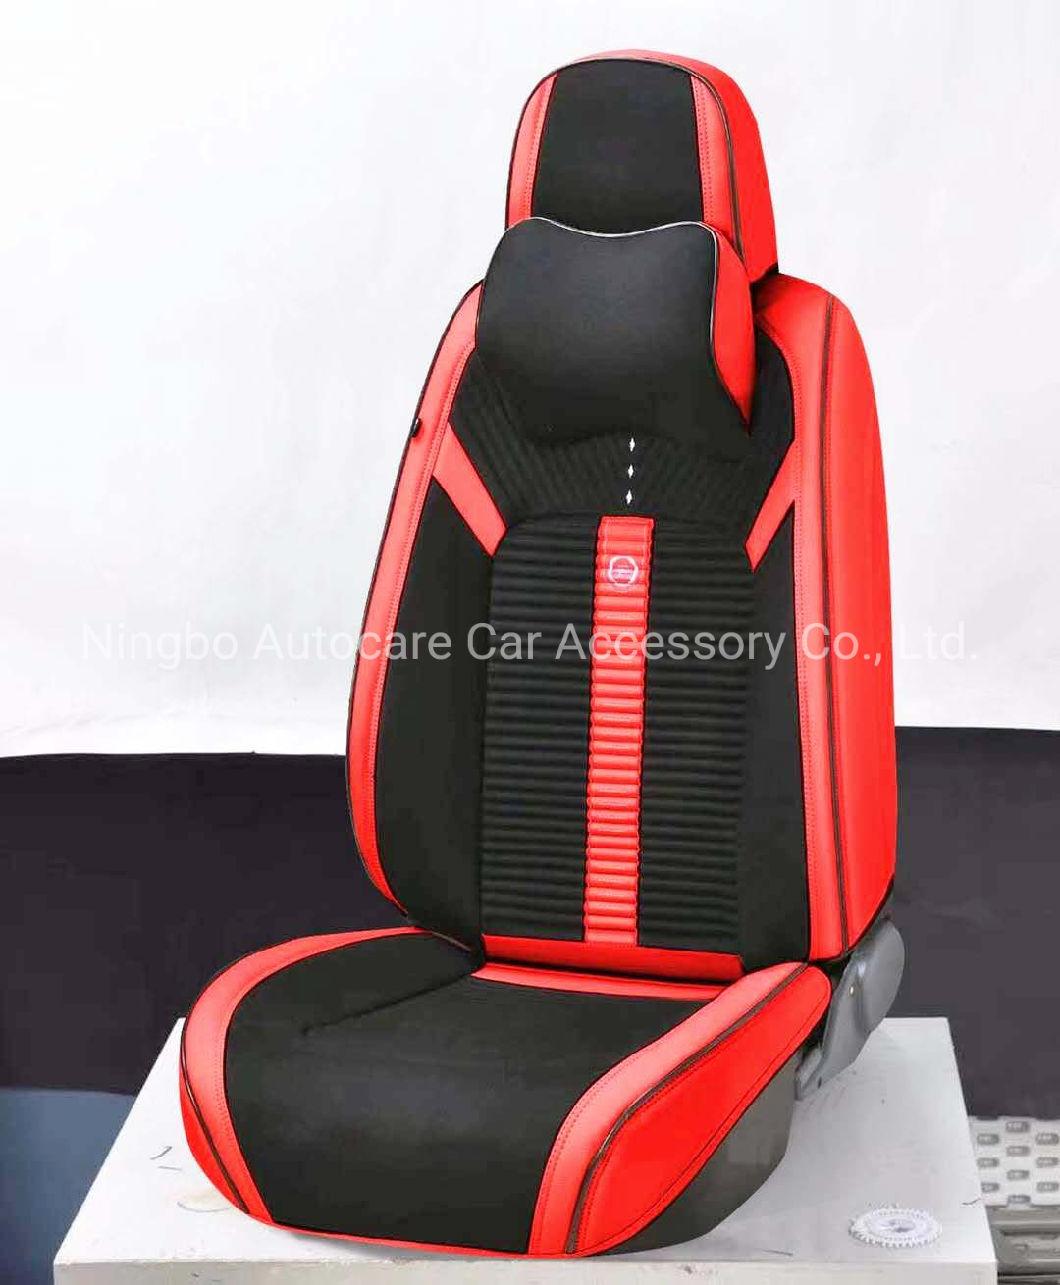 Car Accessories Car Decoration Car Seat Cushion Universal Fashion PVC Leather Auto 9d Car Seat Cover